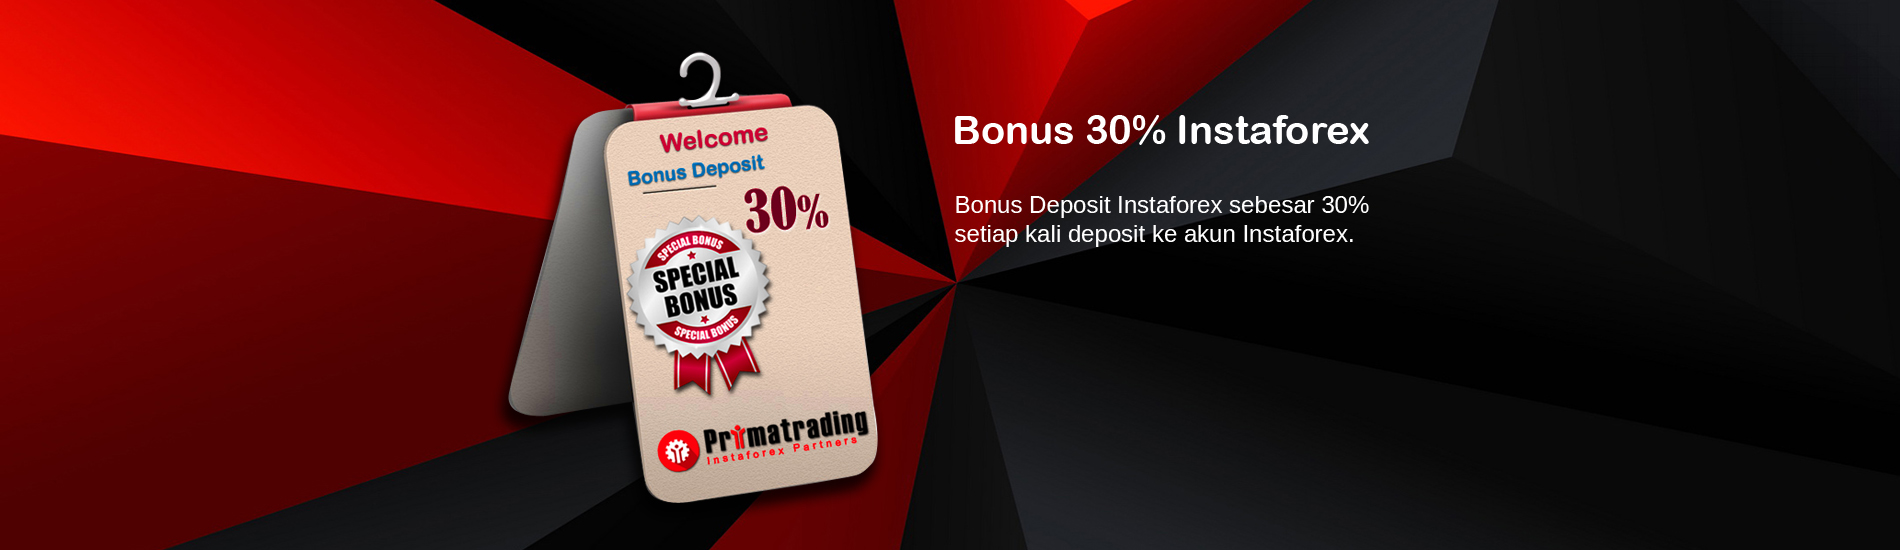 instaforex no deposit bonus $40 an hour